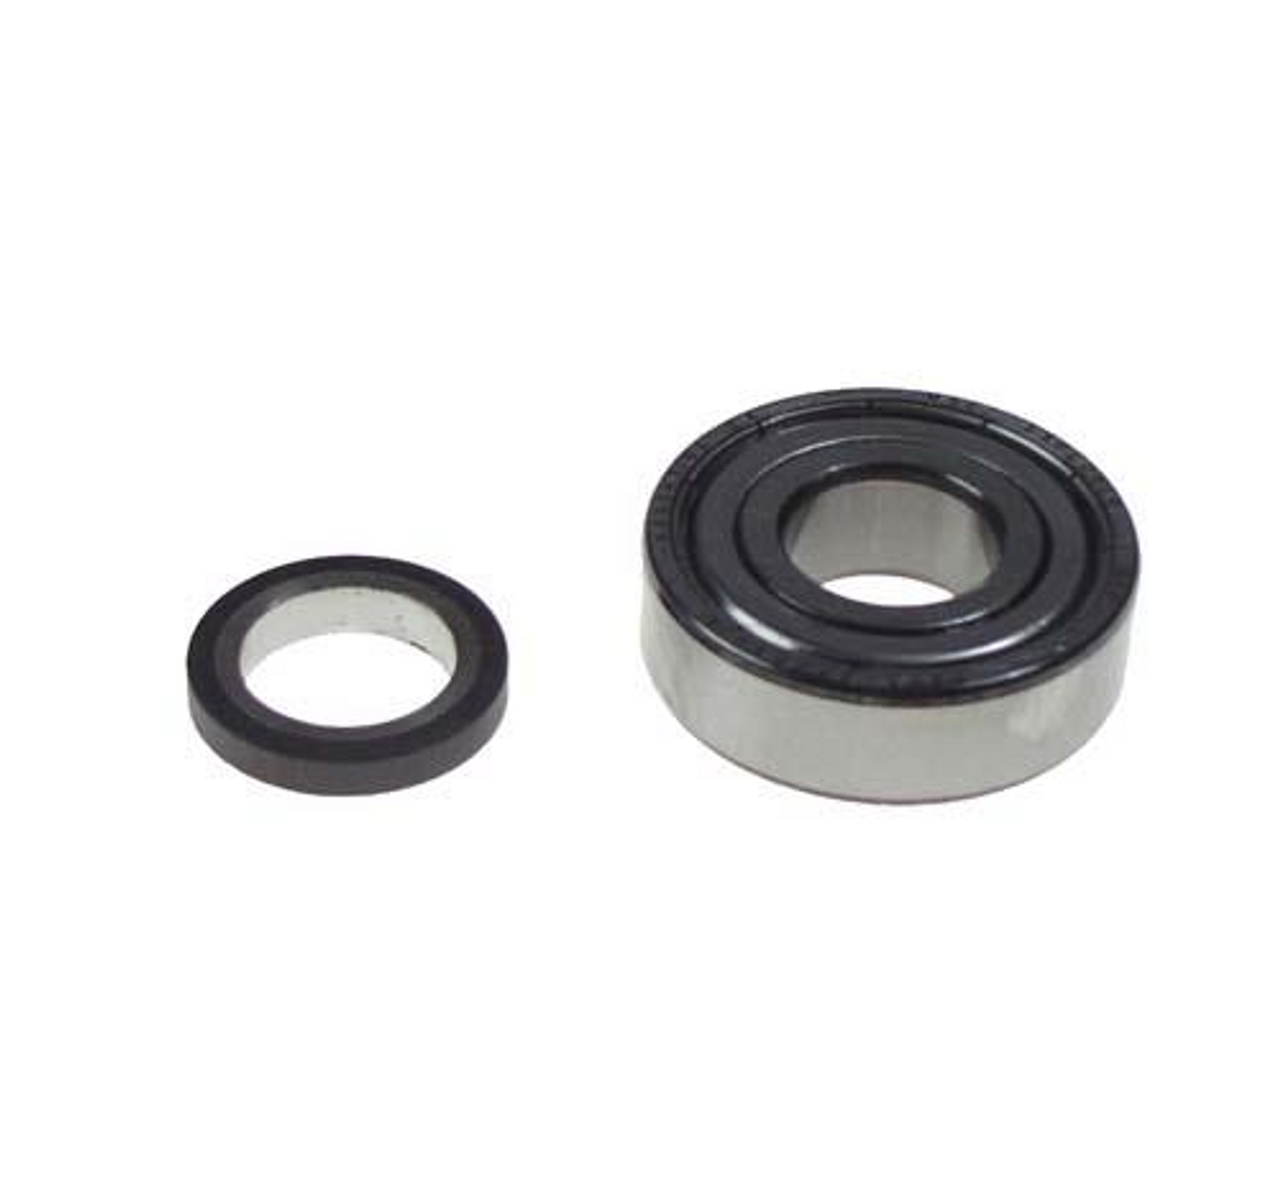 Bearing & Magnet Kit For Ge Motor, 5951, 1022657-01